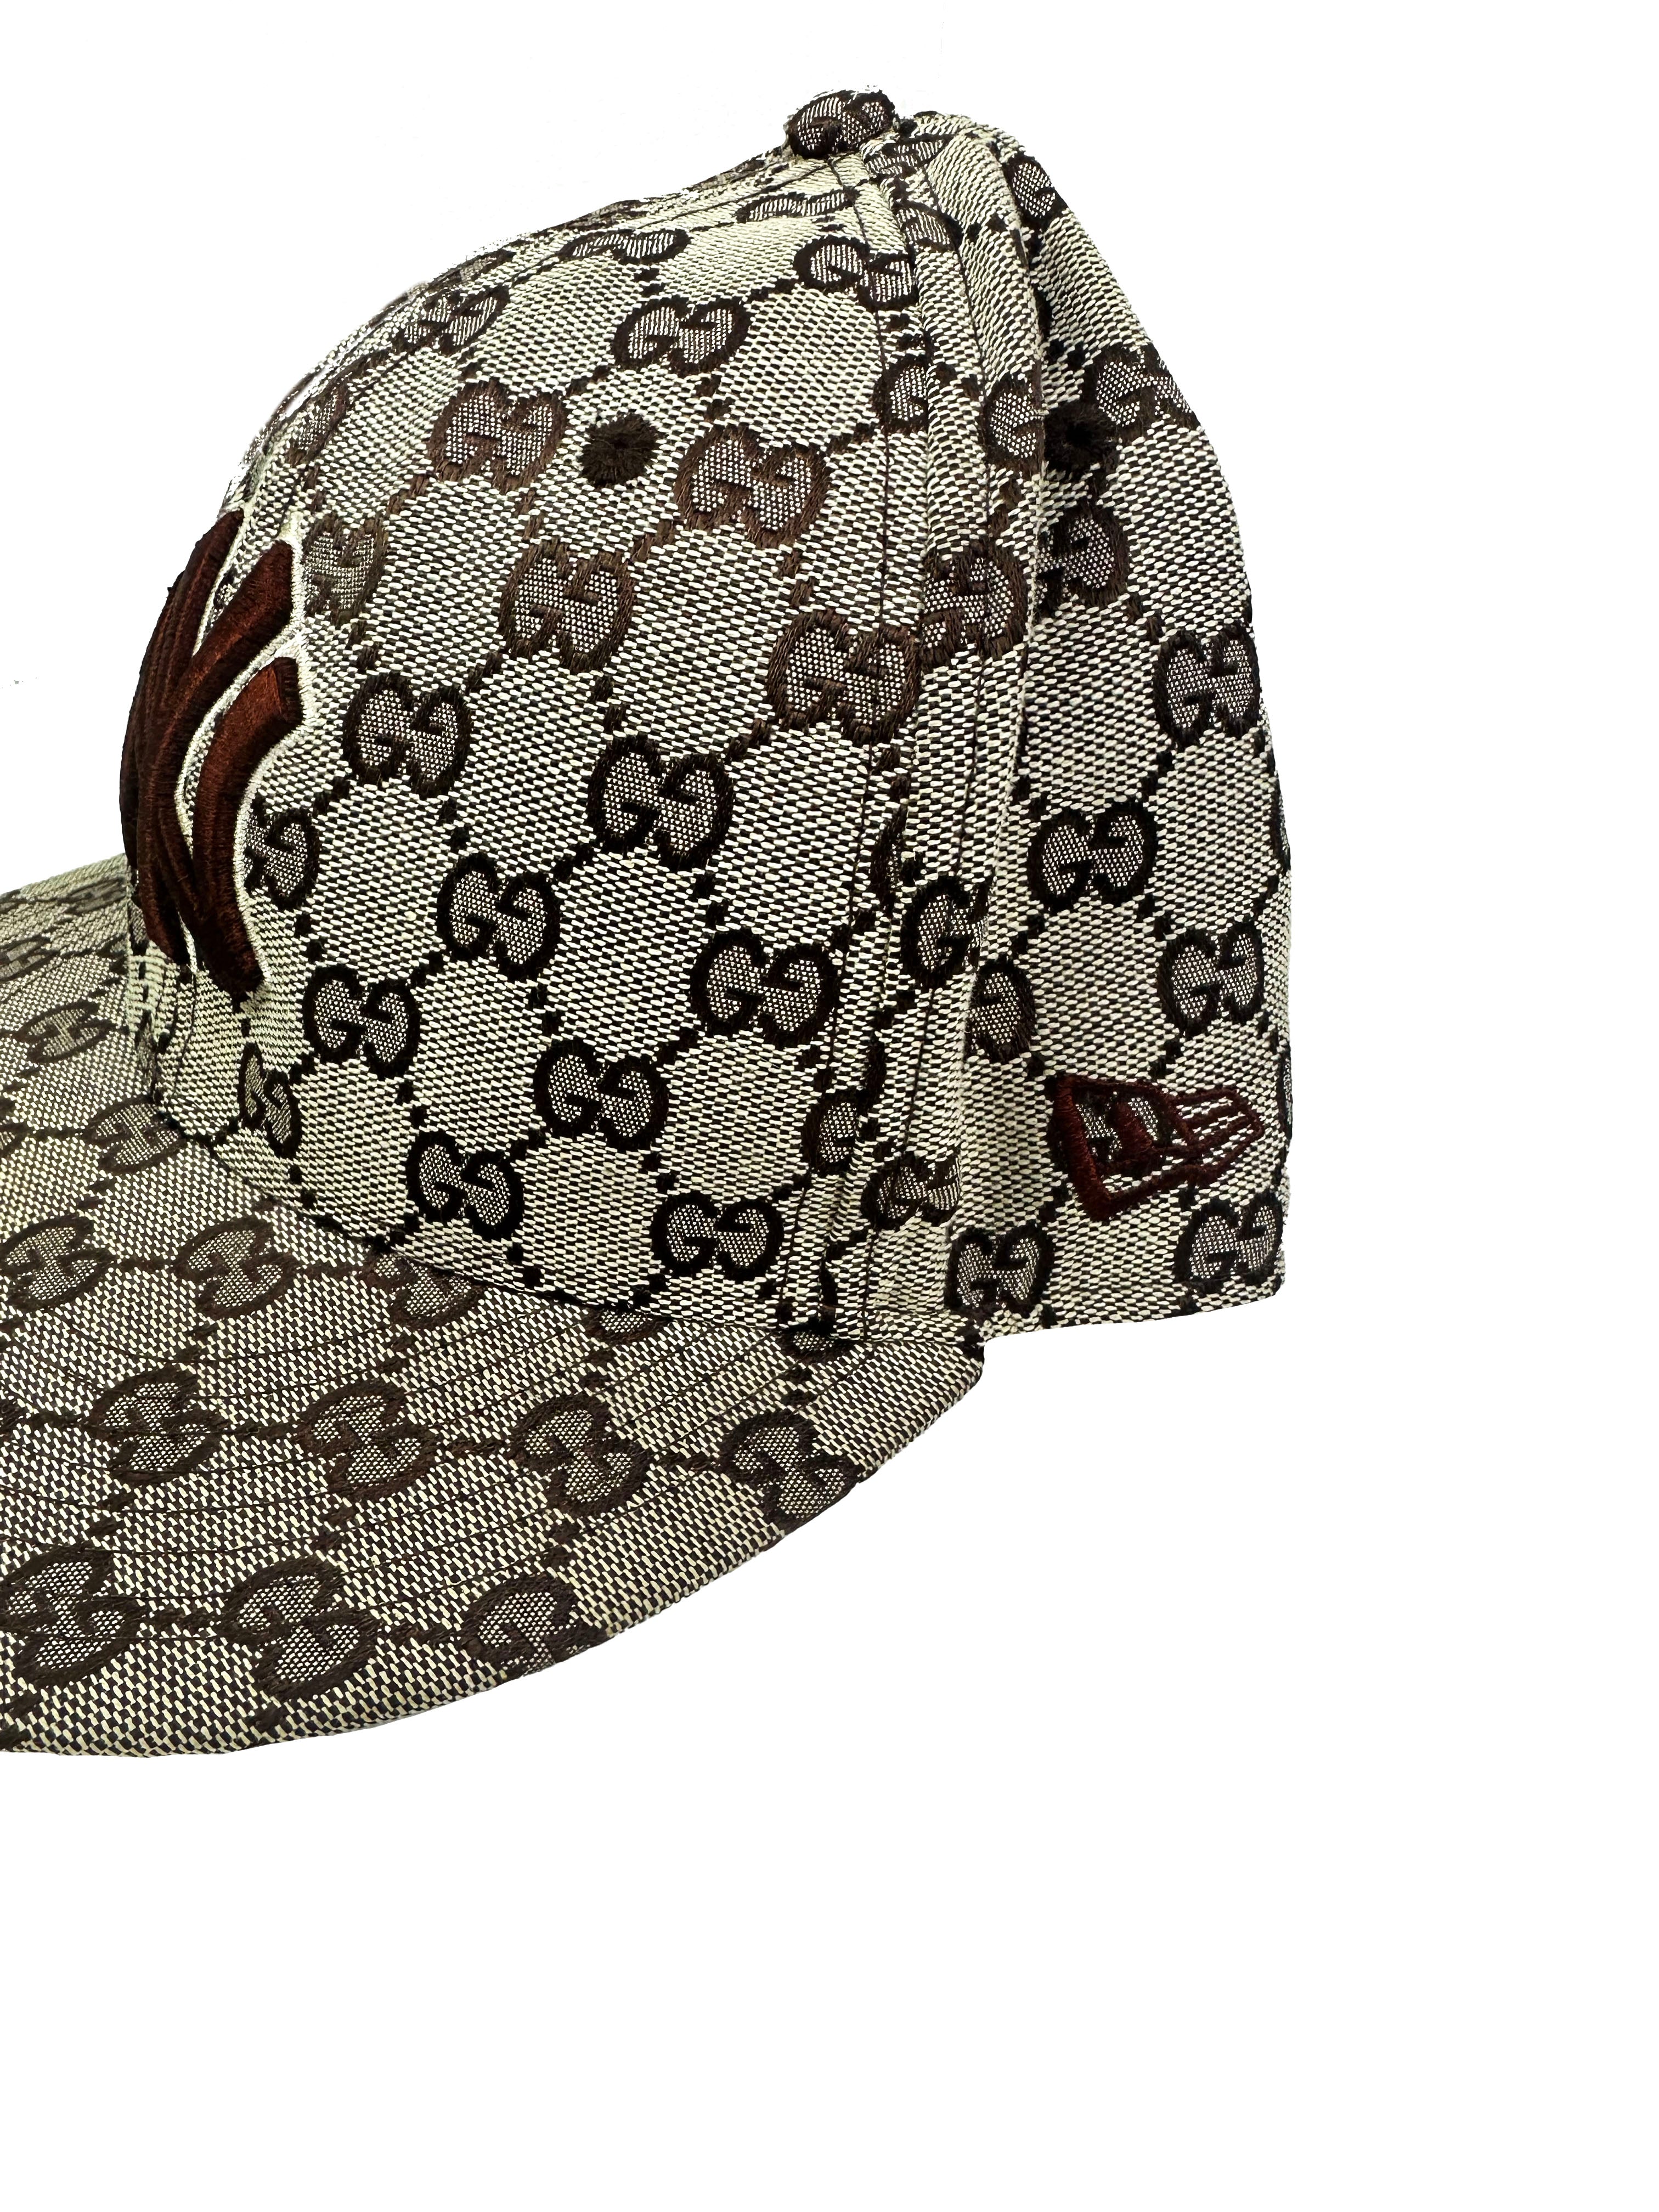 New Era Gucci Hat Size 00's